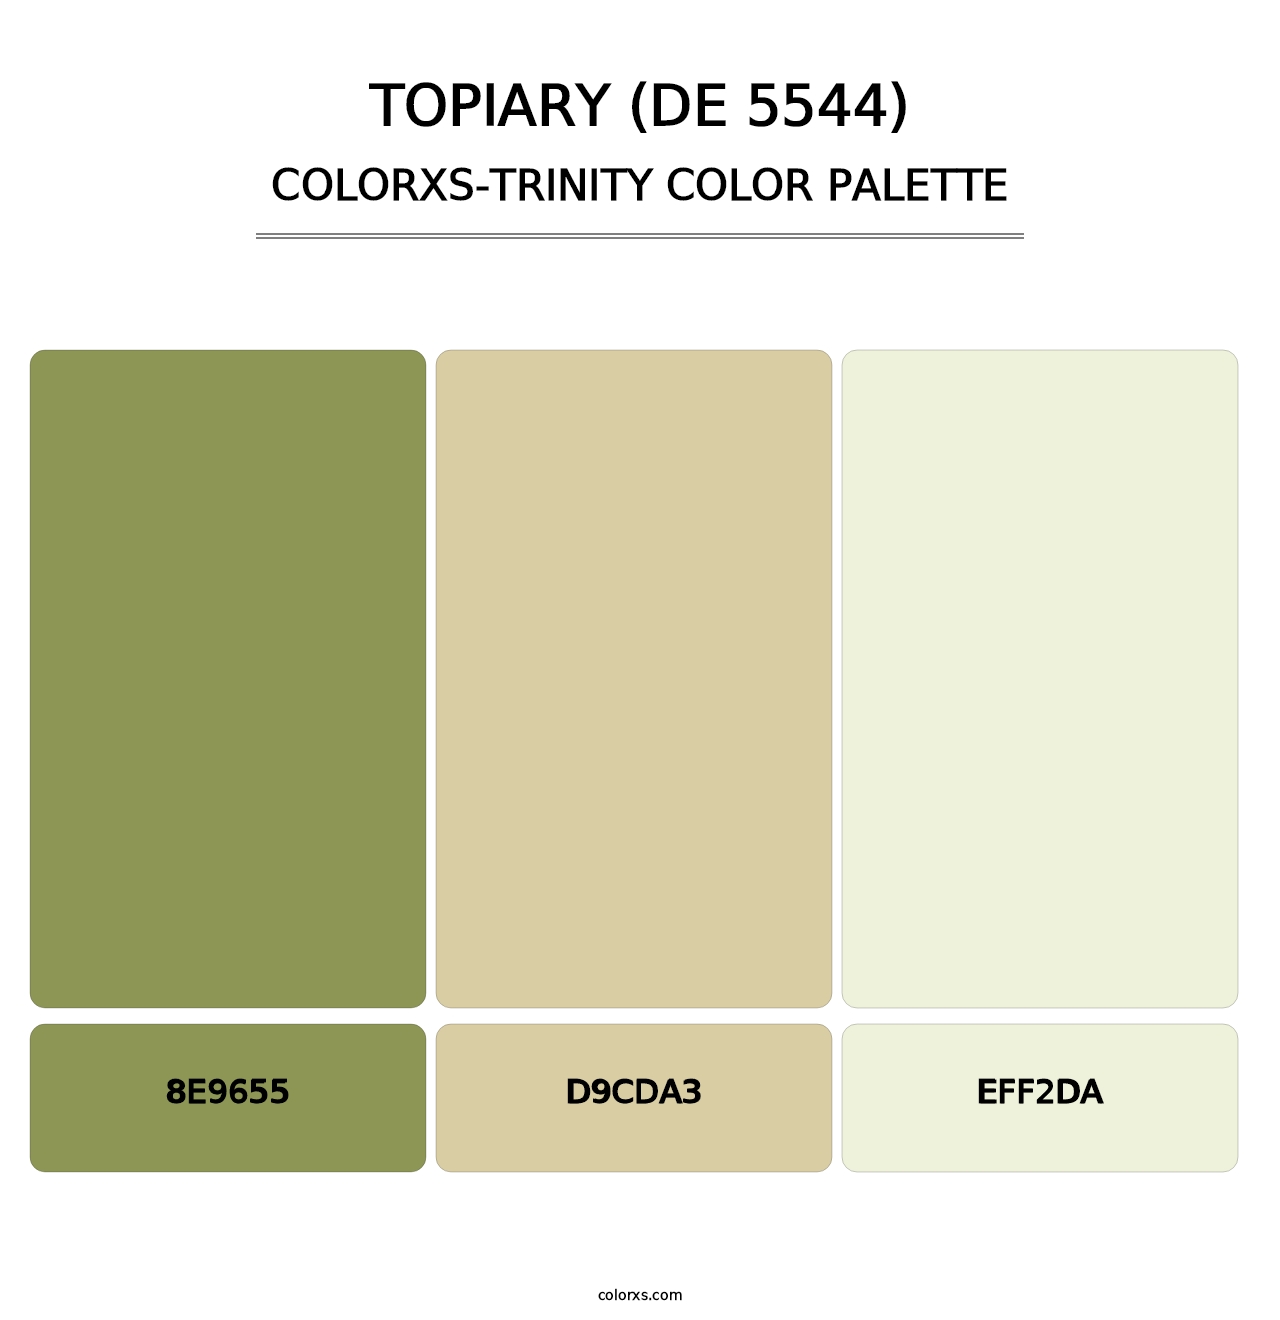 Topiary (DE 5544) - Colorxs Trinity Palette